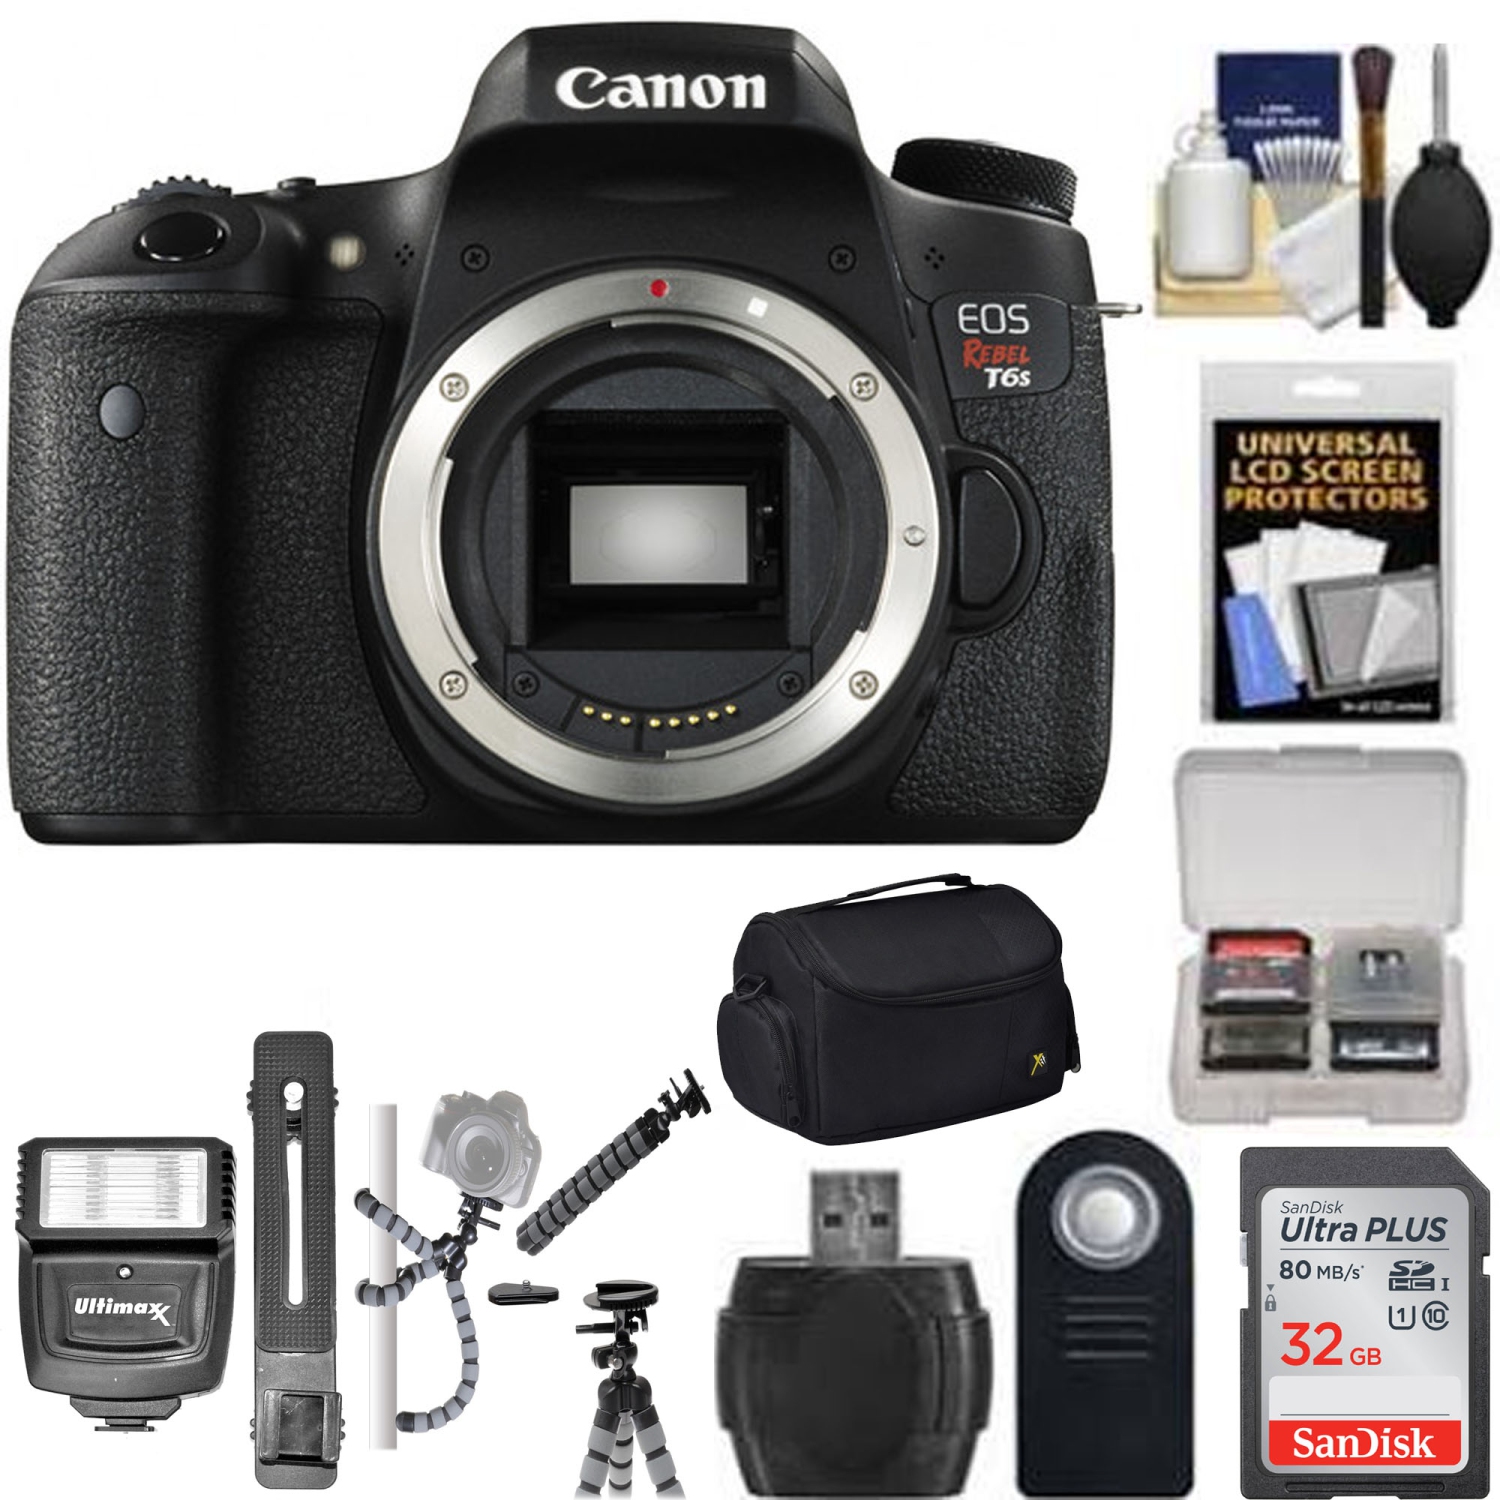 Canon EOS Rebel T6s Wi-Fi Digital SLR Camera Body with 32GB Card + Case + Strap + Flash + Remote = Deluxe kit - US Version w/ Seller Warranty